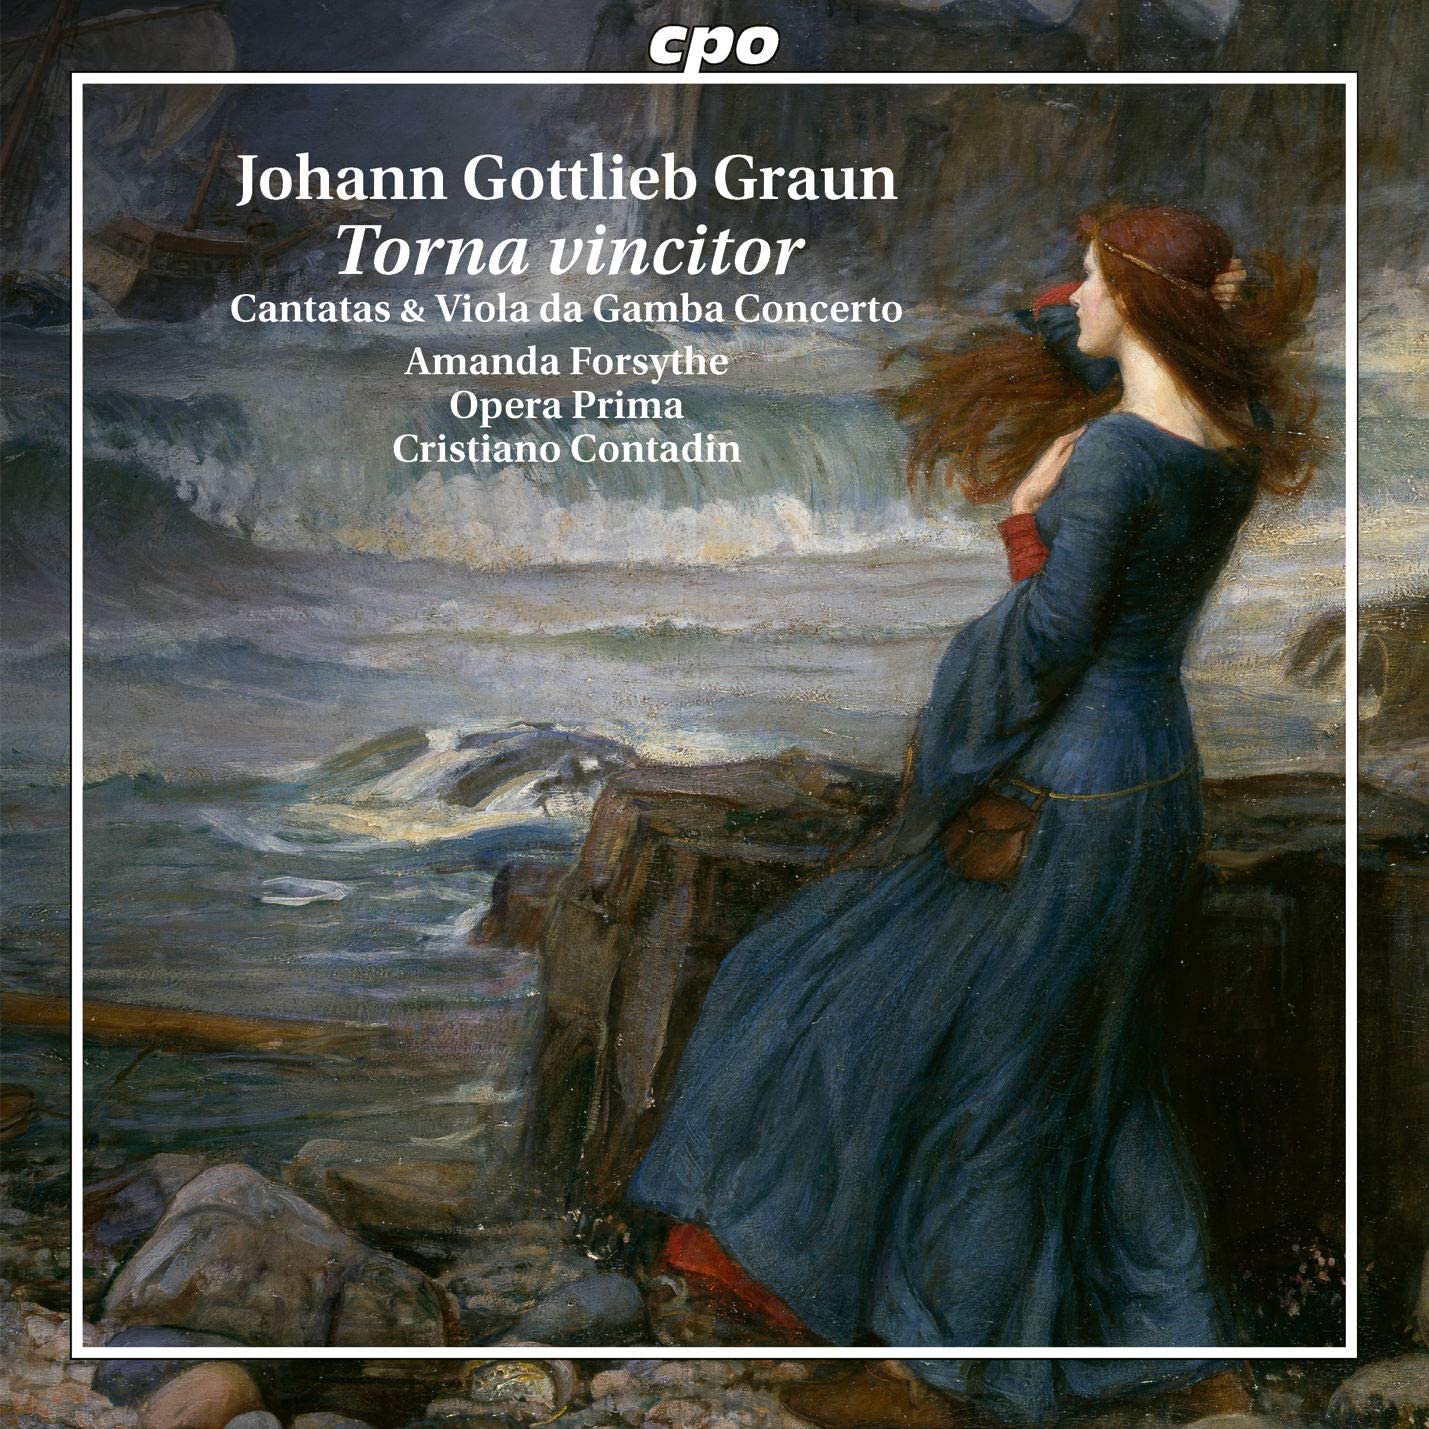 Johann Gottlieb Graun vocal and instrumental music CD